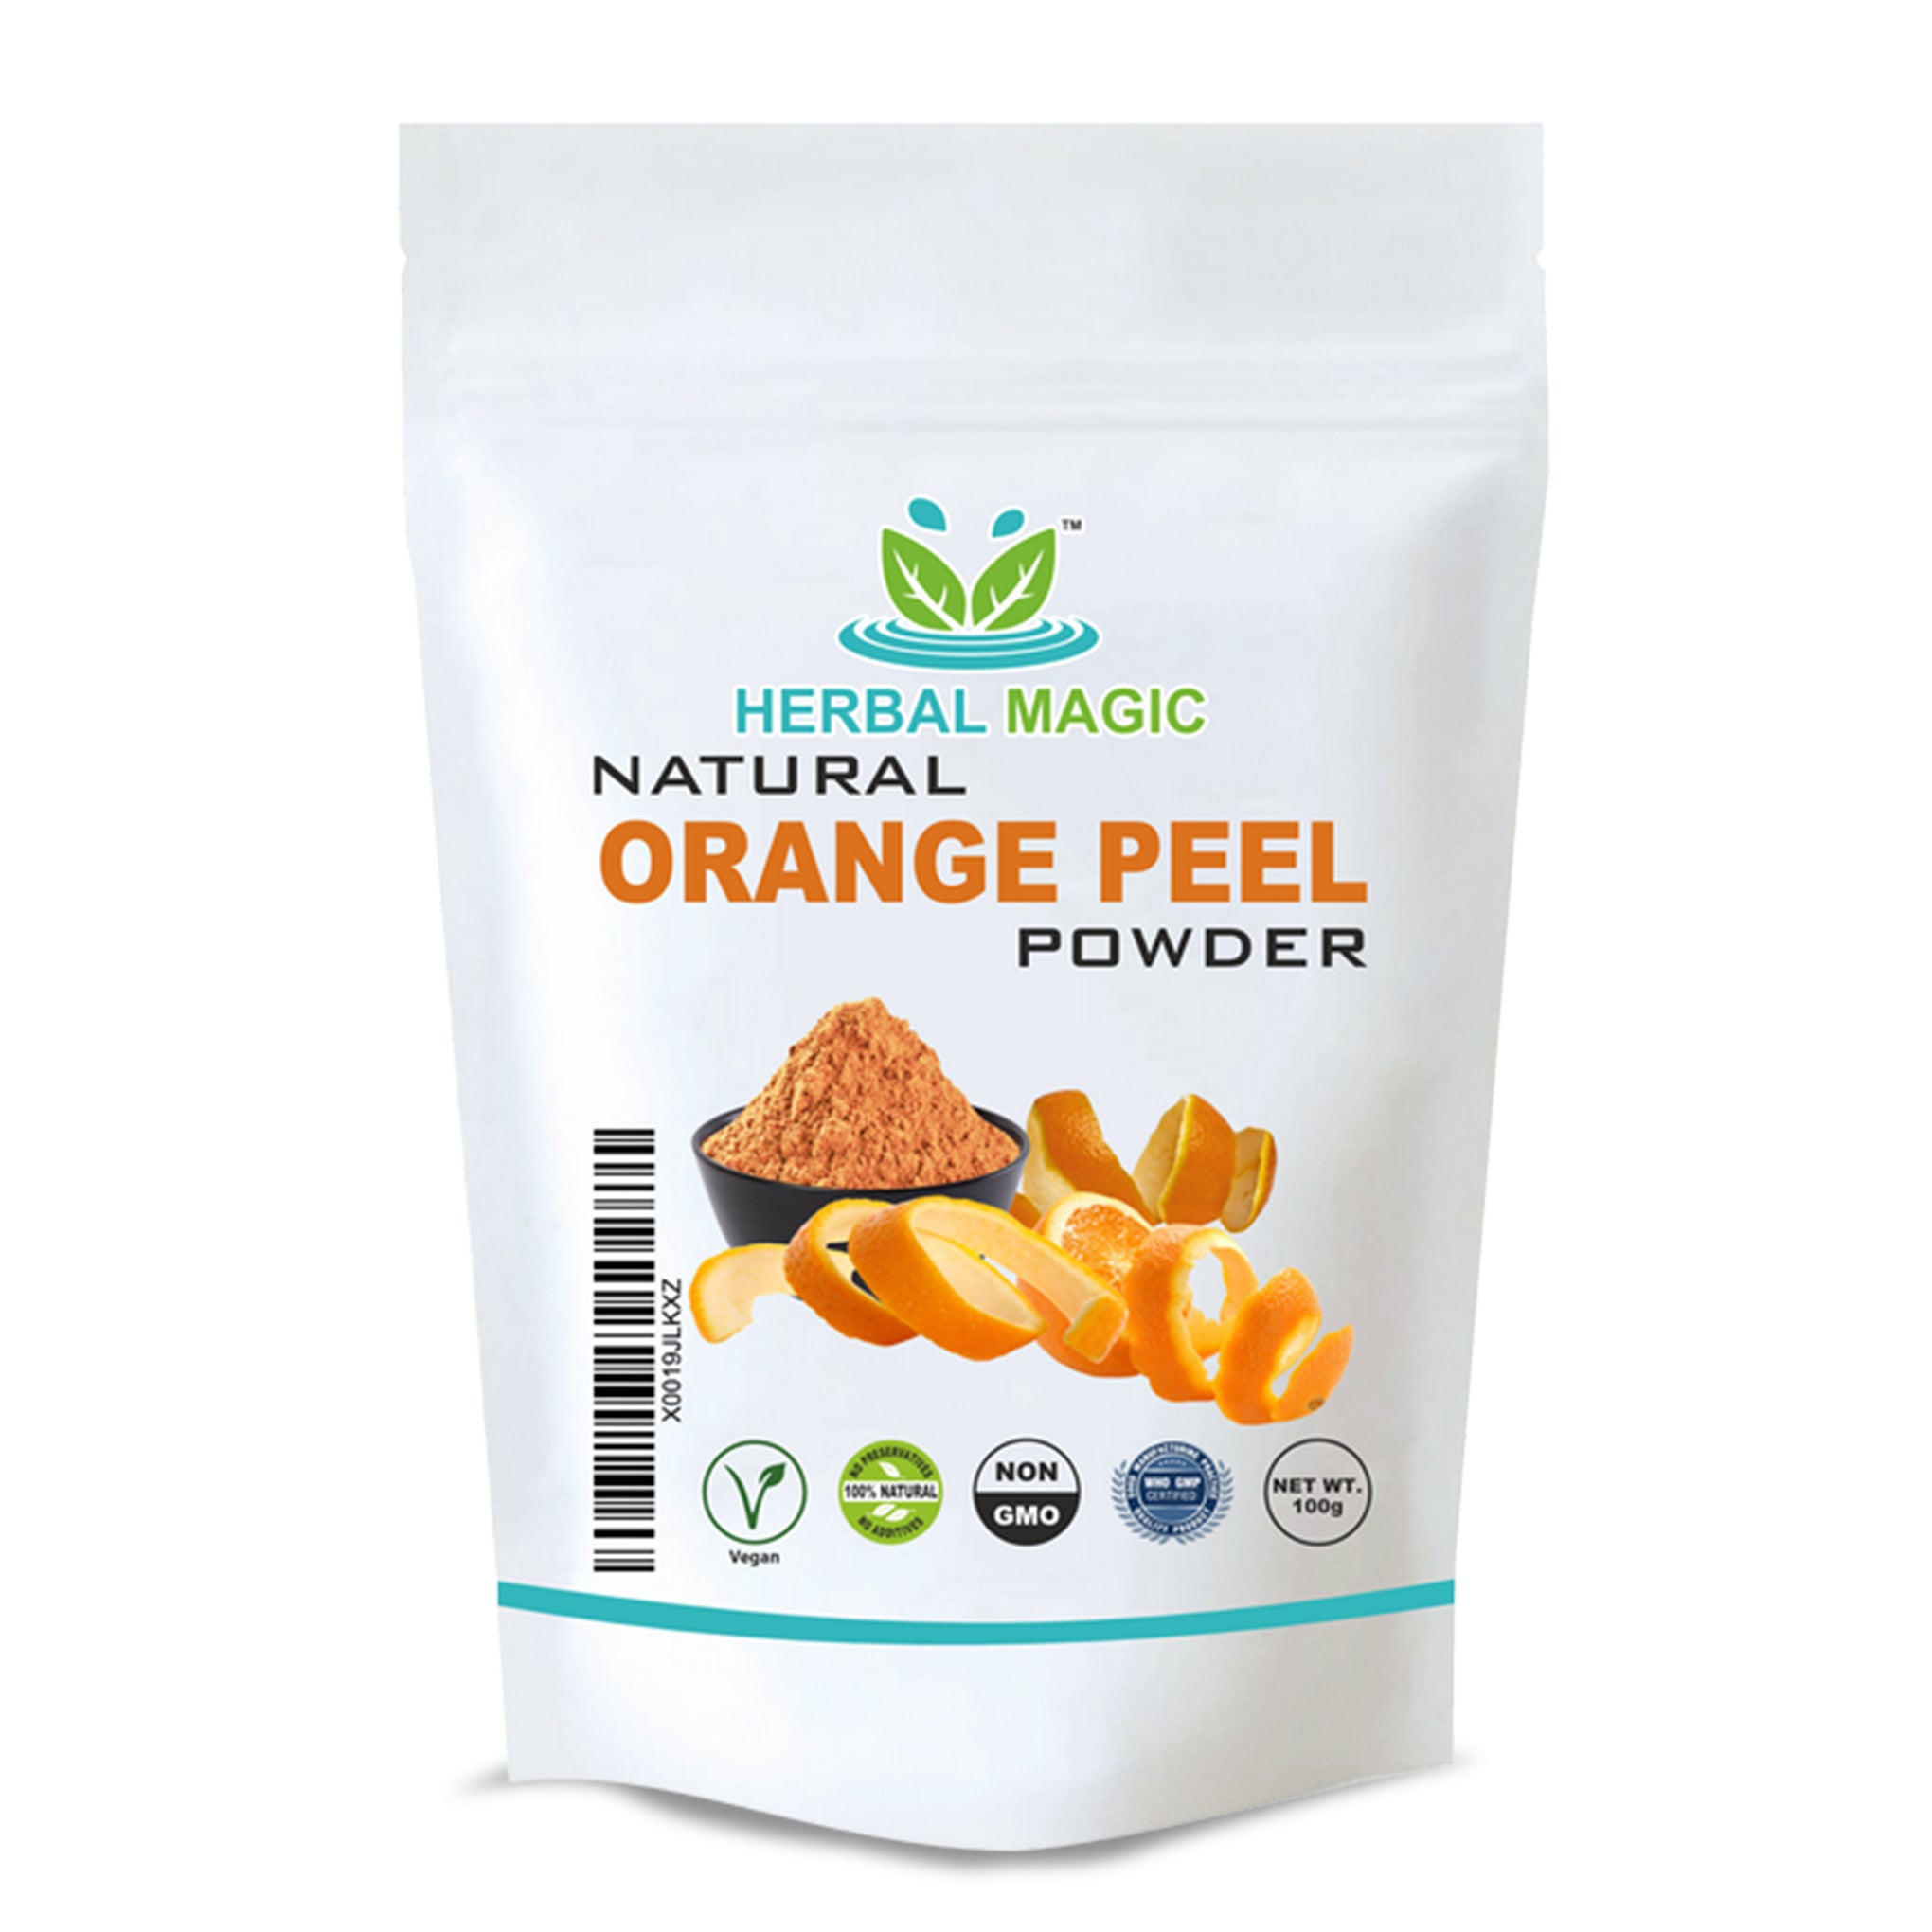 Natural Orange peel powder